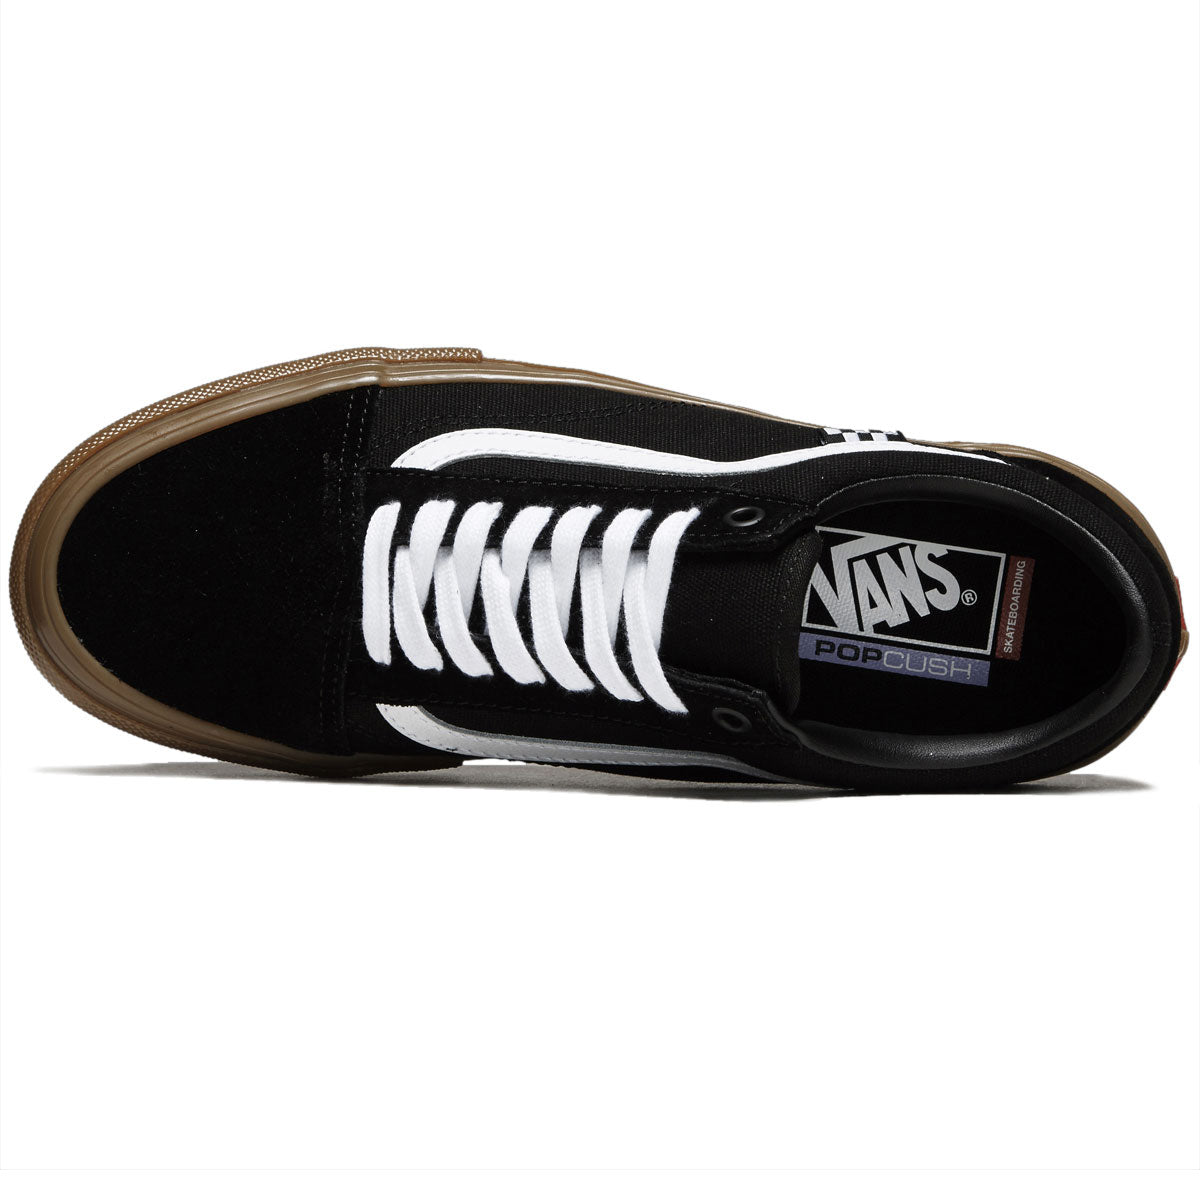 Vans Skate Old Skool Shoes - Black/Gum image 3